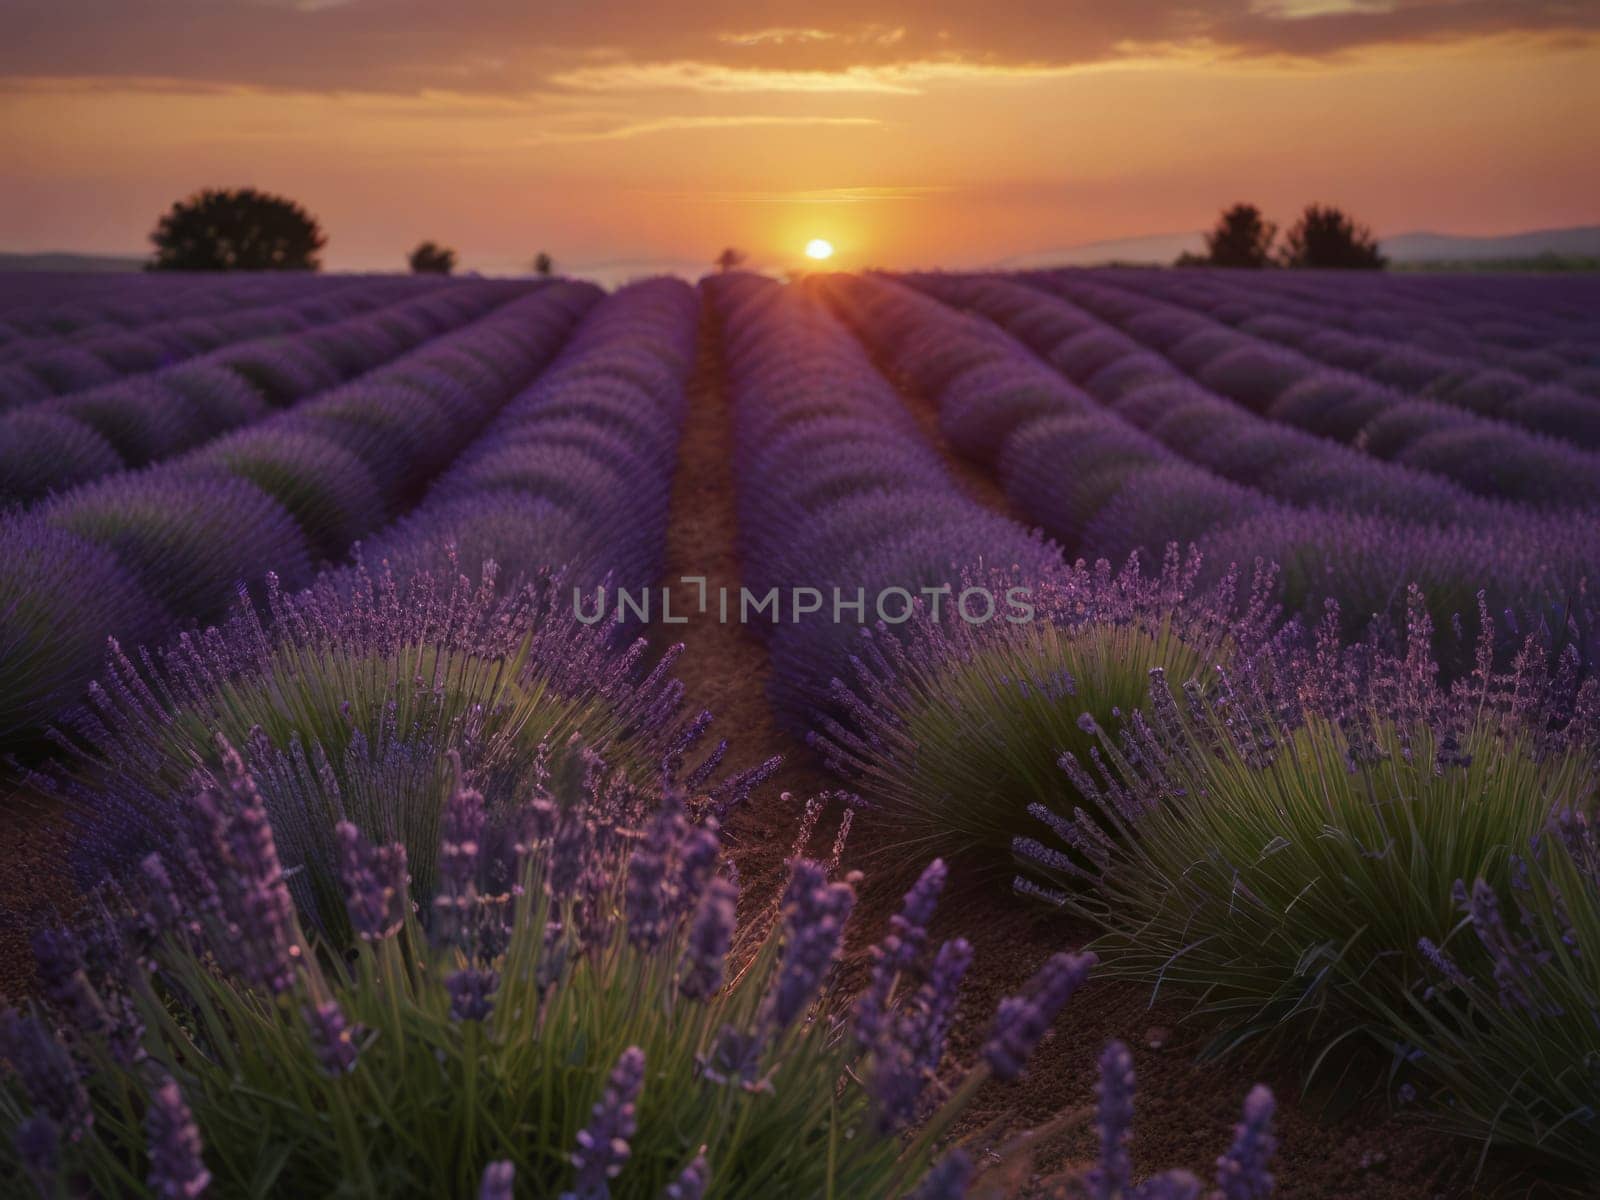 Calming backlight illuminates the serene purple lavender field